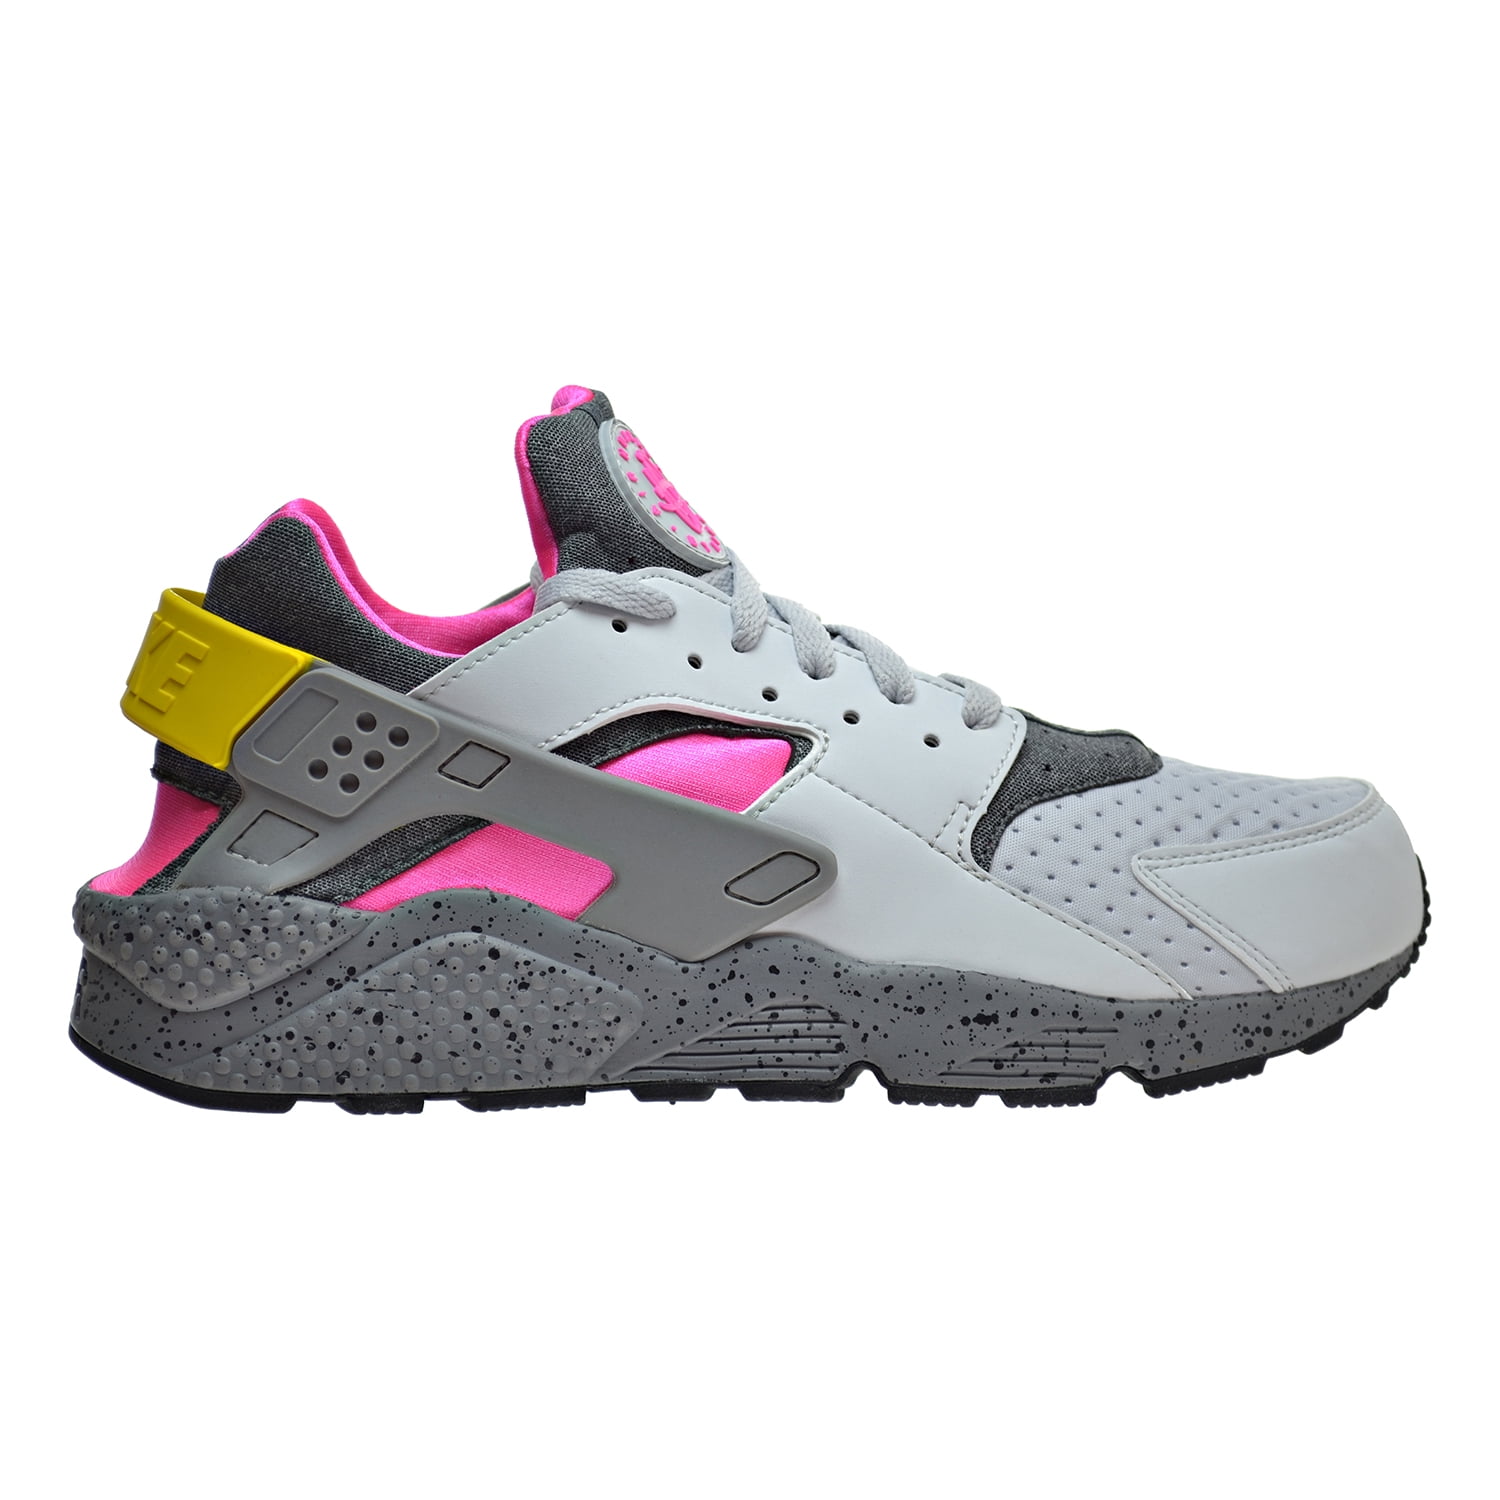 Nike Air Huarache Run SE Men's Shoes Pure Platinum/Pink Blast/Dark Grey 852628-002 (10 D(M) US)